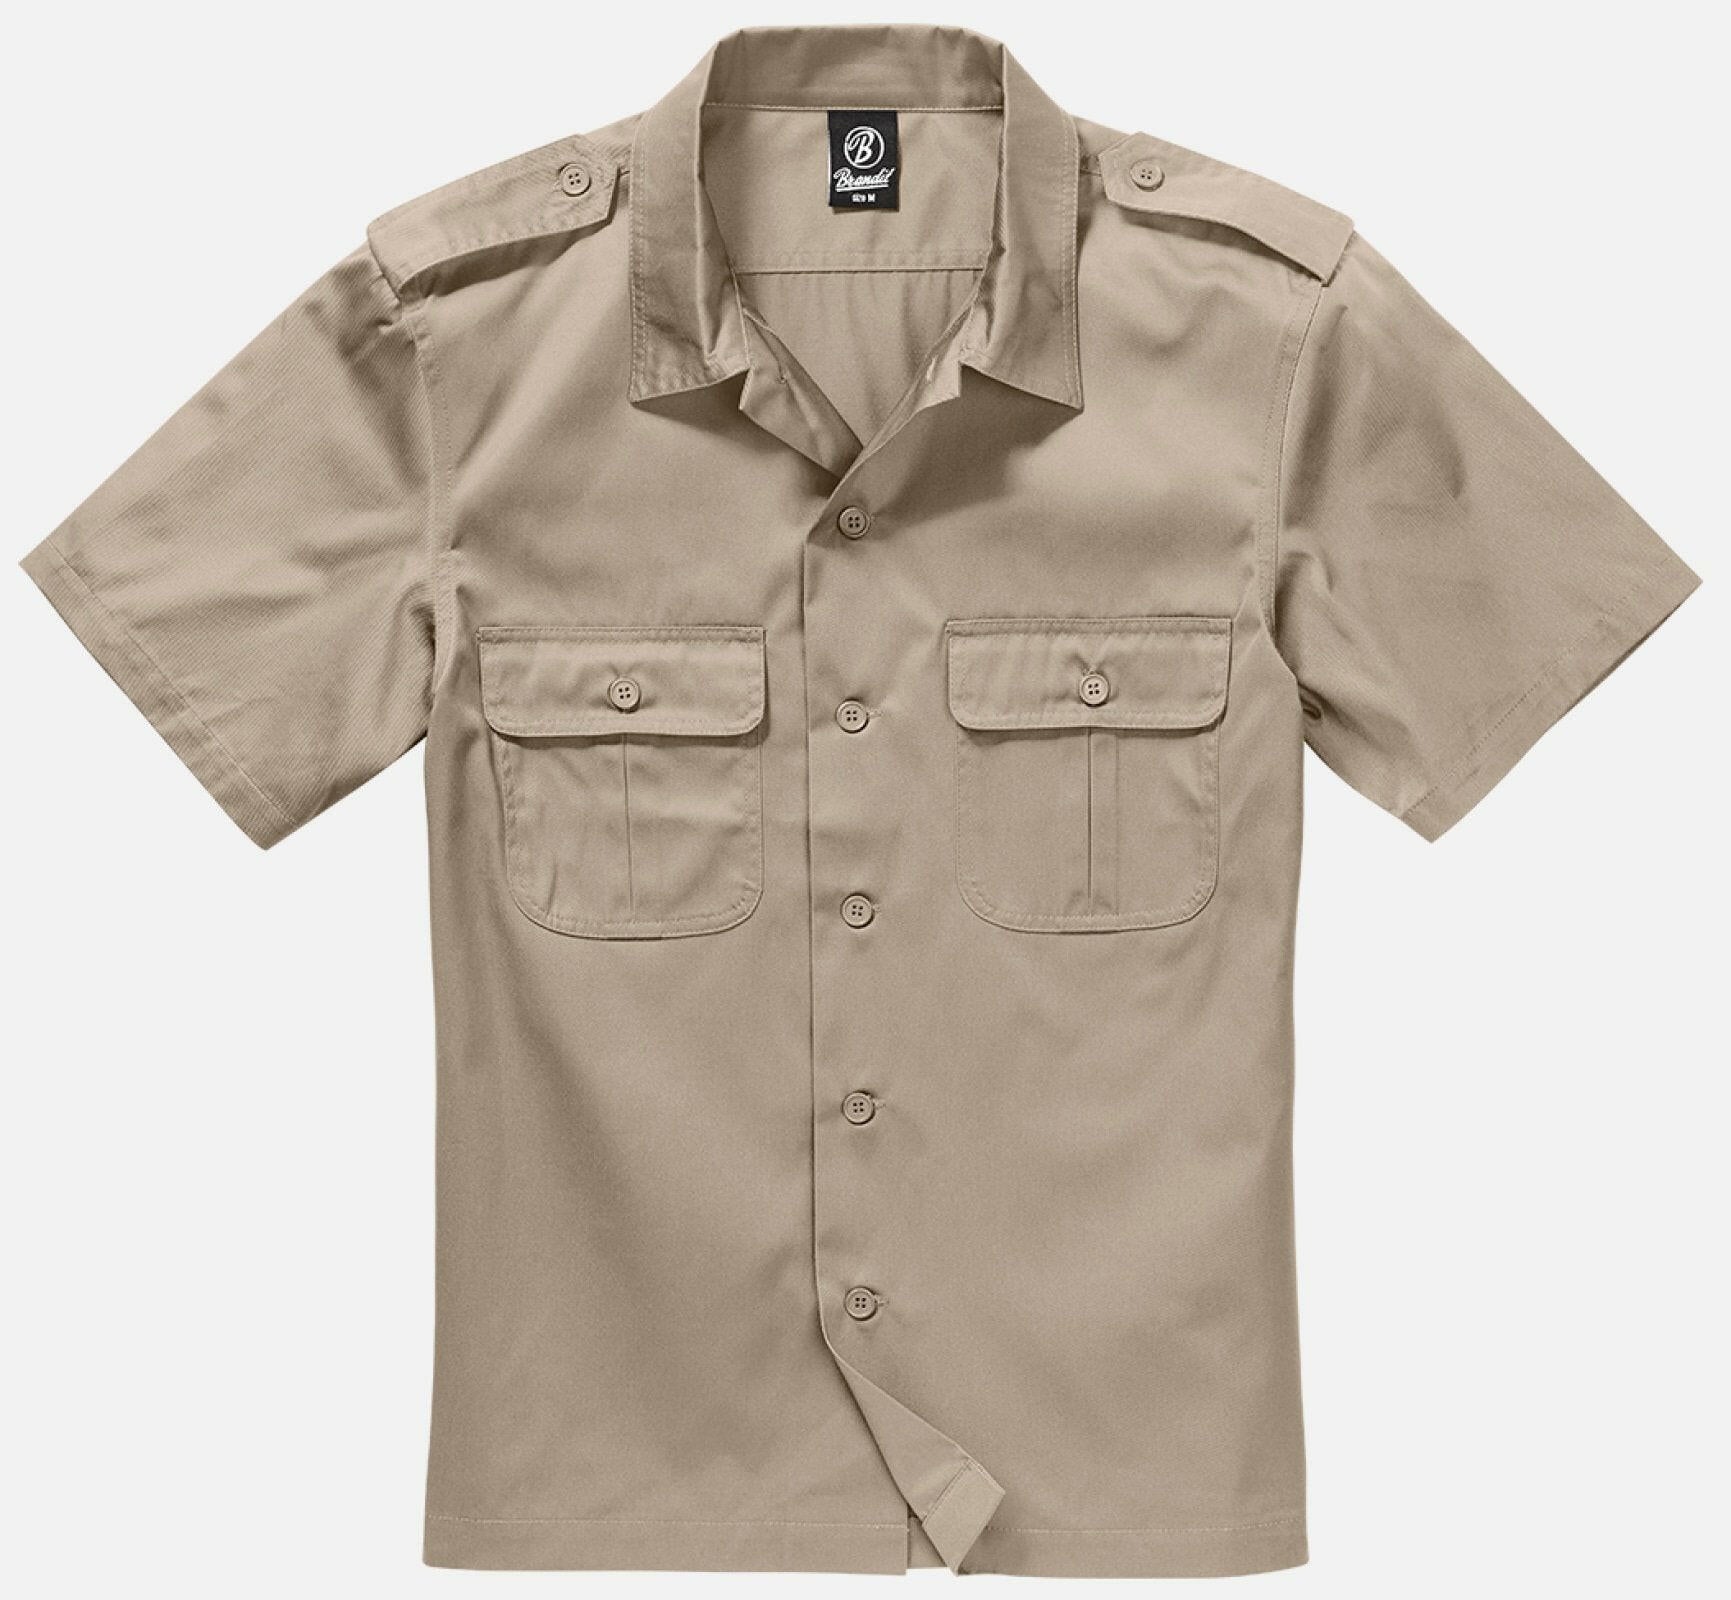 Short Sleeves US Shirt (4 Colors / Sizes S-7XL) Callisto